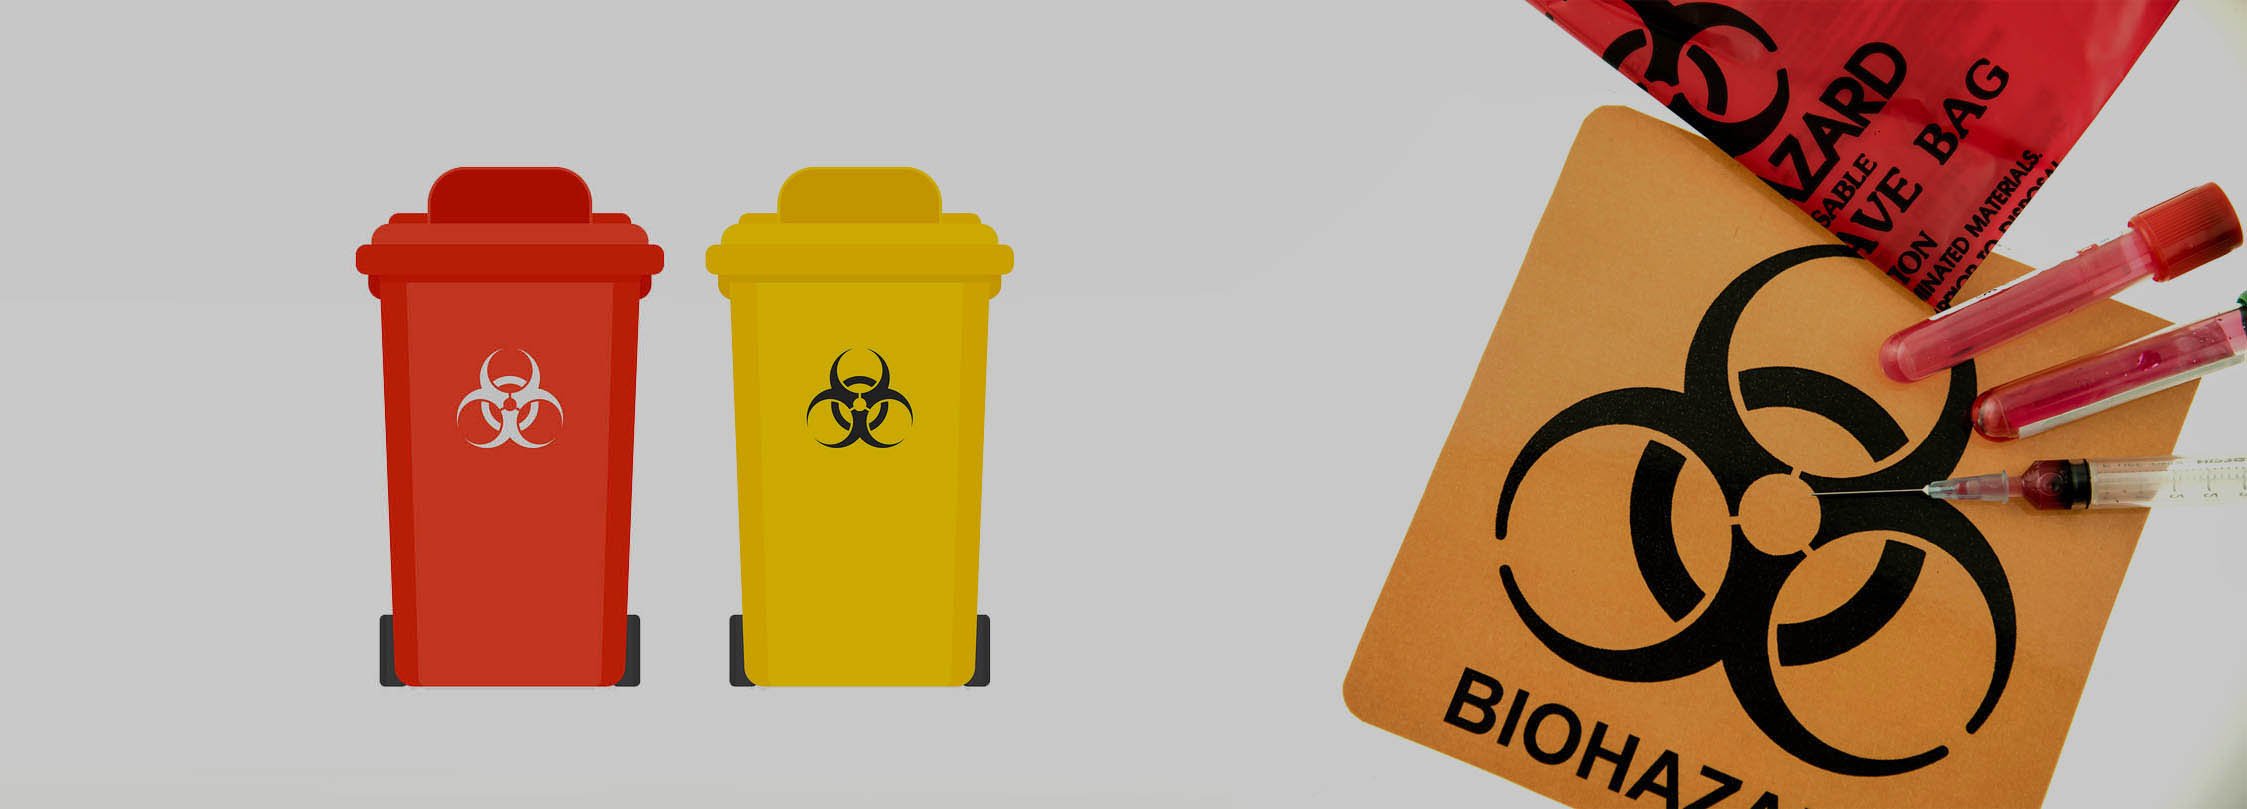 Biomedical Waste Management PDF -   BIOMEDICAL  WASTE  MANAGEMENT  BIOMEDICAL WASTE MANAGEMENT  - Studocu